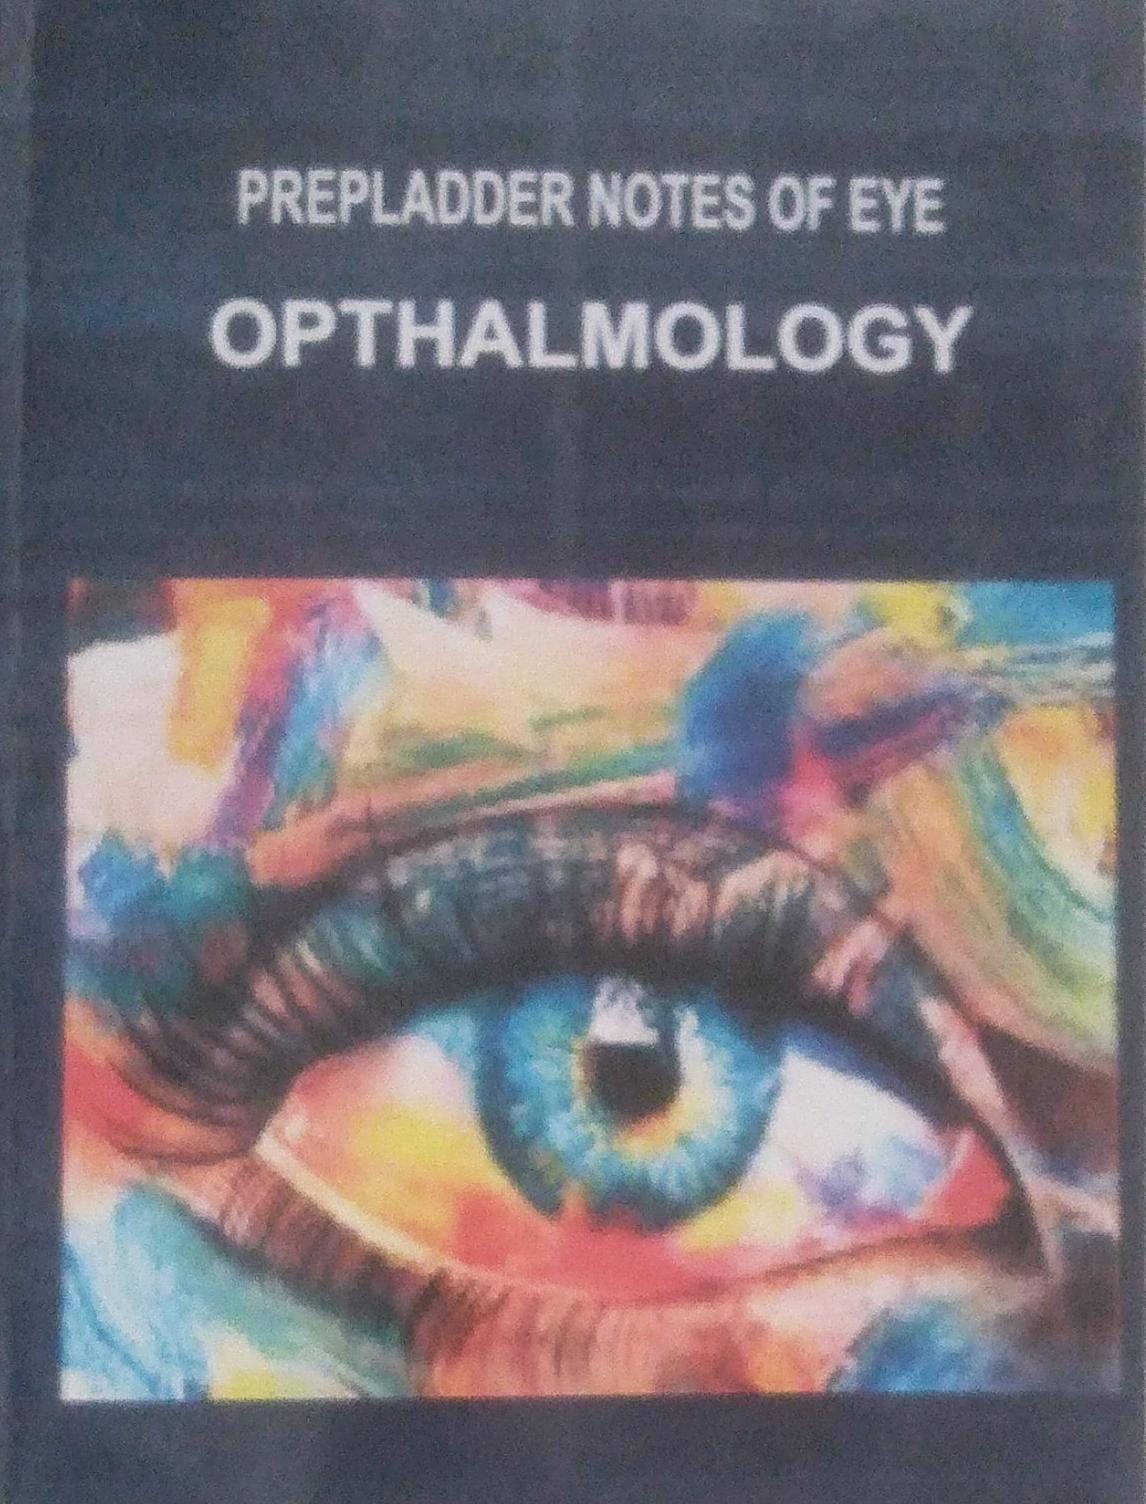 PREPLADDER NOTES OF eye opthalmology